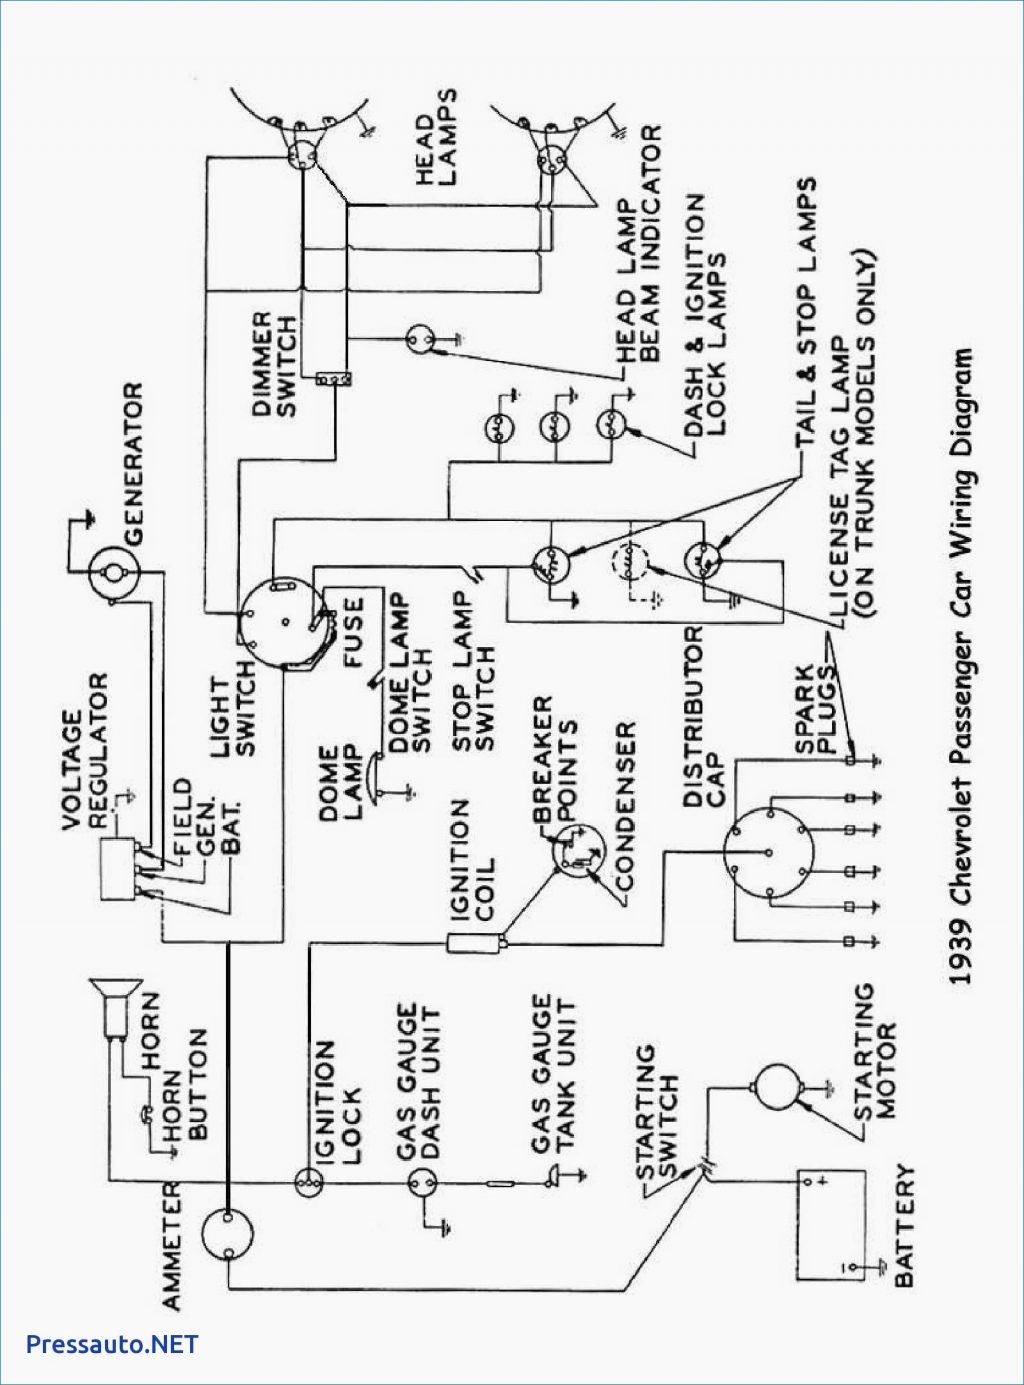 Diagram Leviton Way Switch Wiring Decora Dimmer Uk With